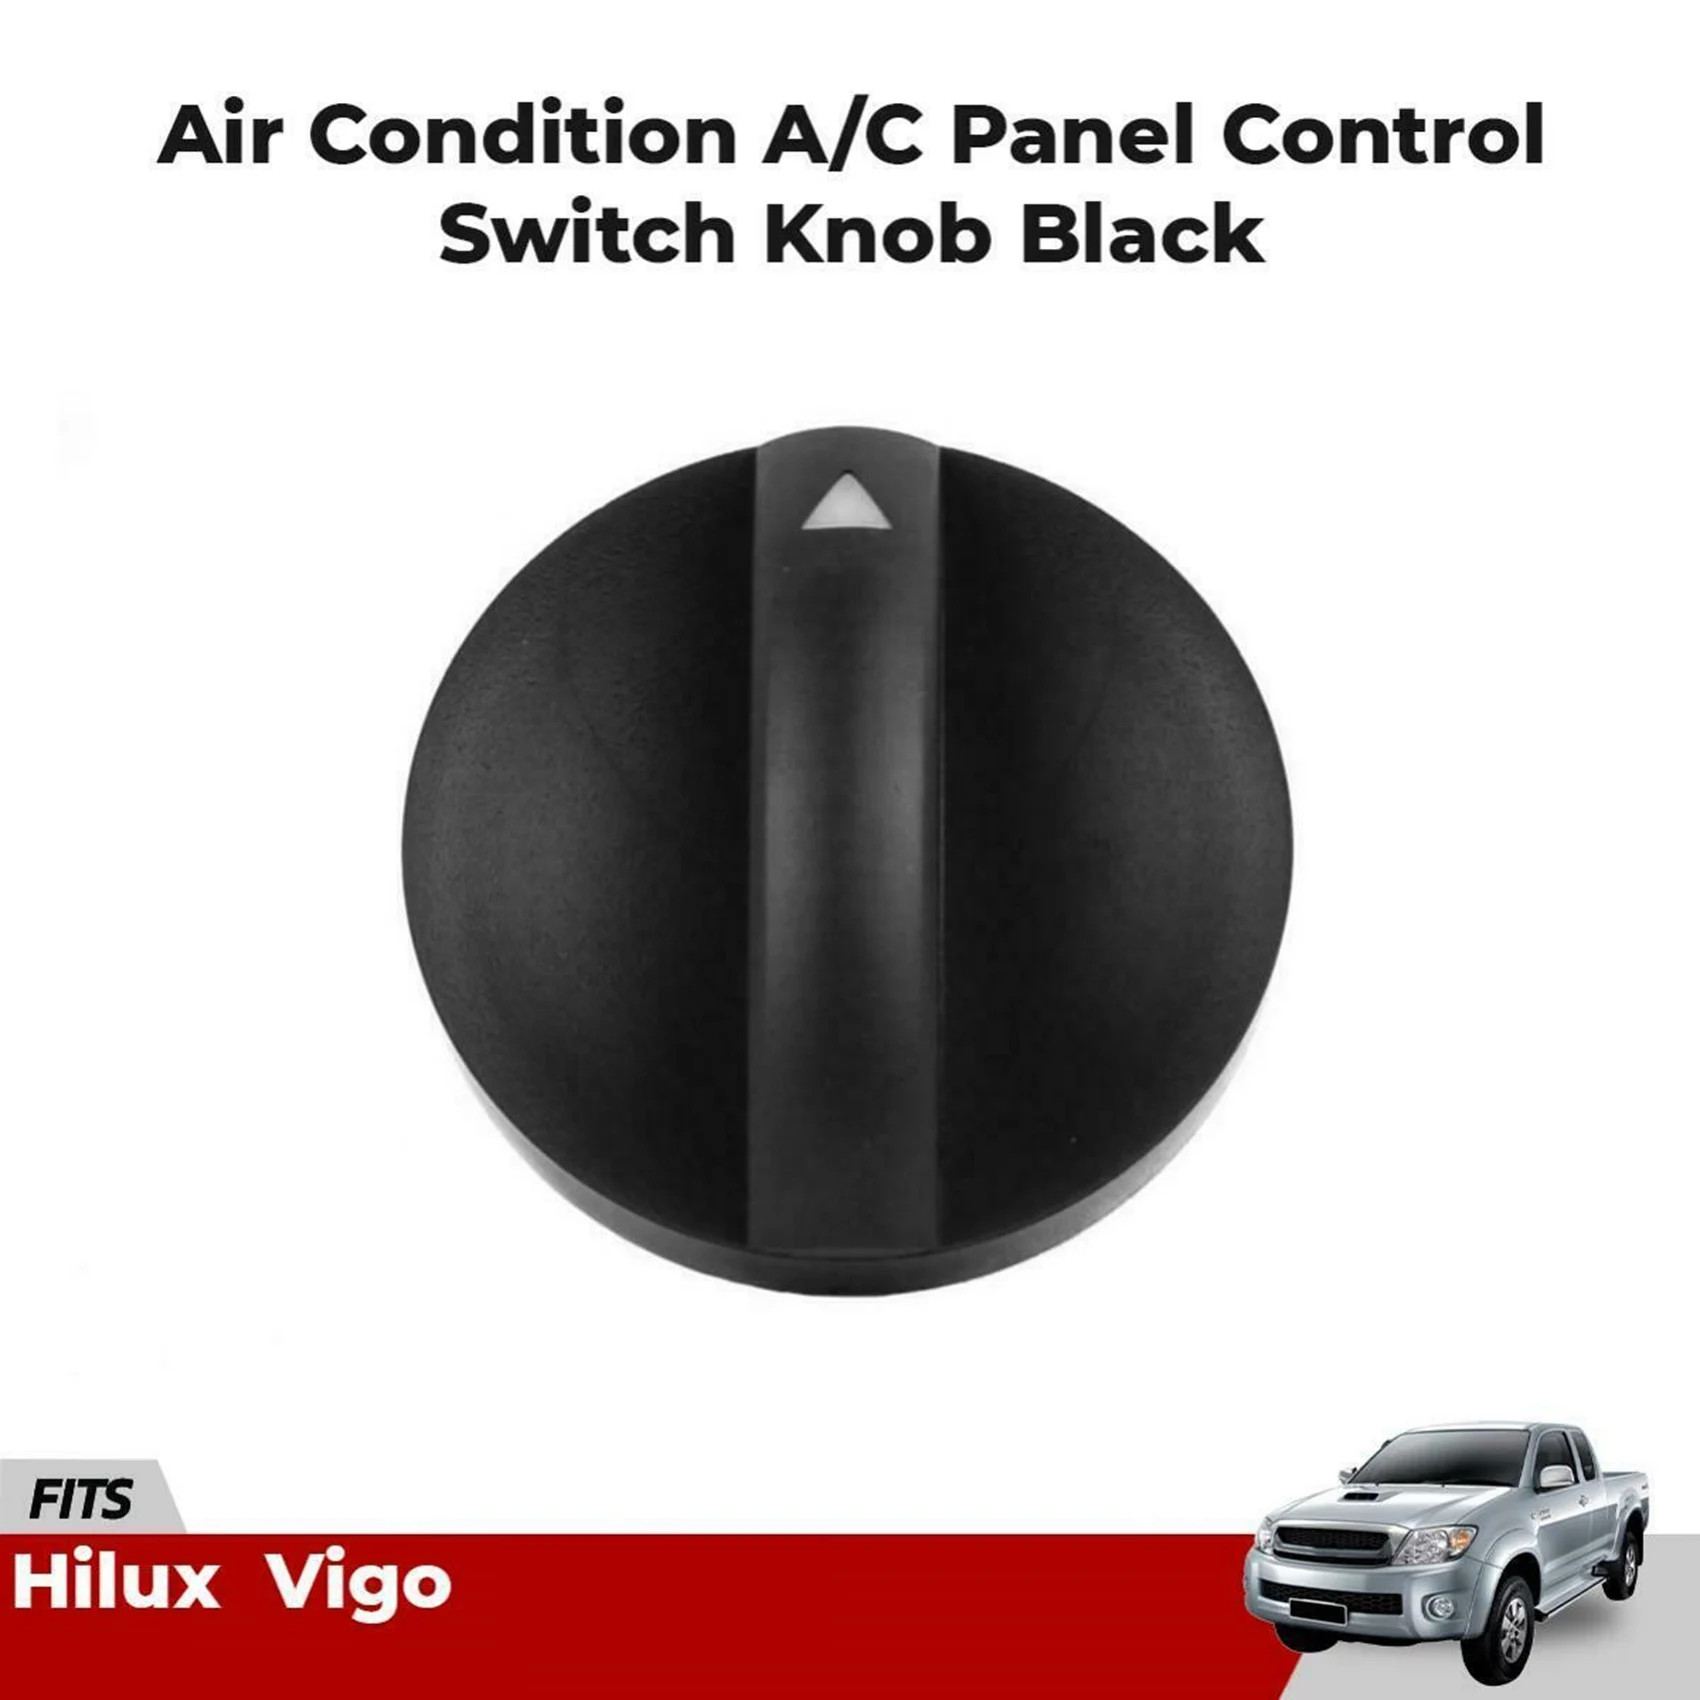 Coche de Aire acondicionado A/C en el Panel de Control de la Perilla del Interruptor de Negro para Toyota Hilux Vigo 2004-2011 55905-0K011 559050K011